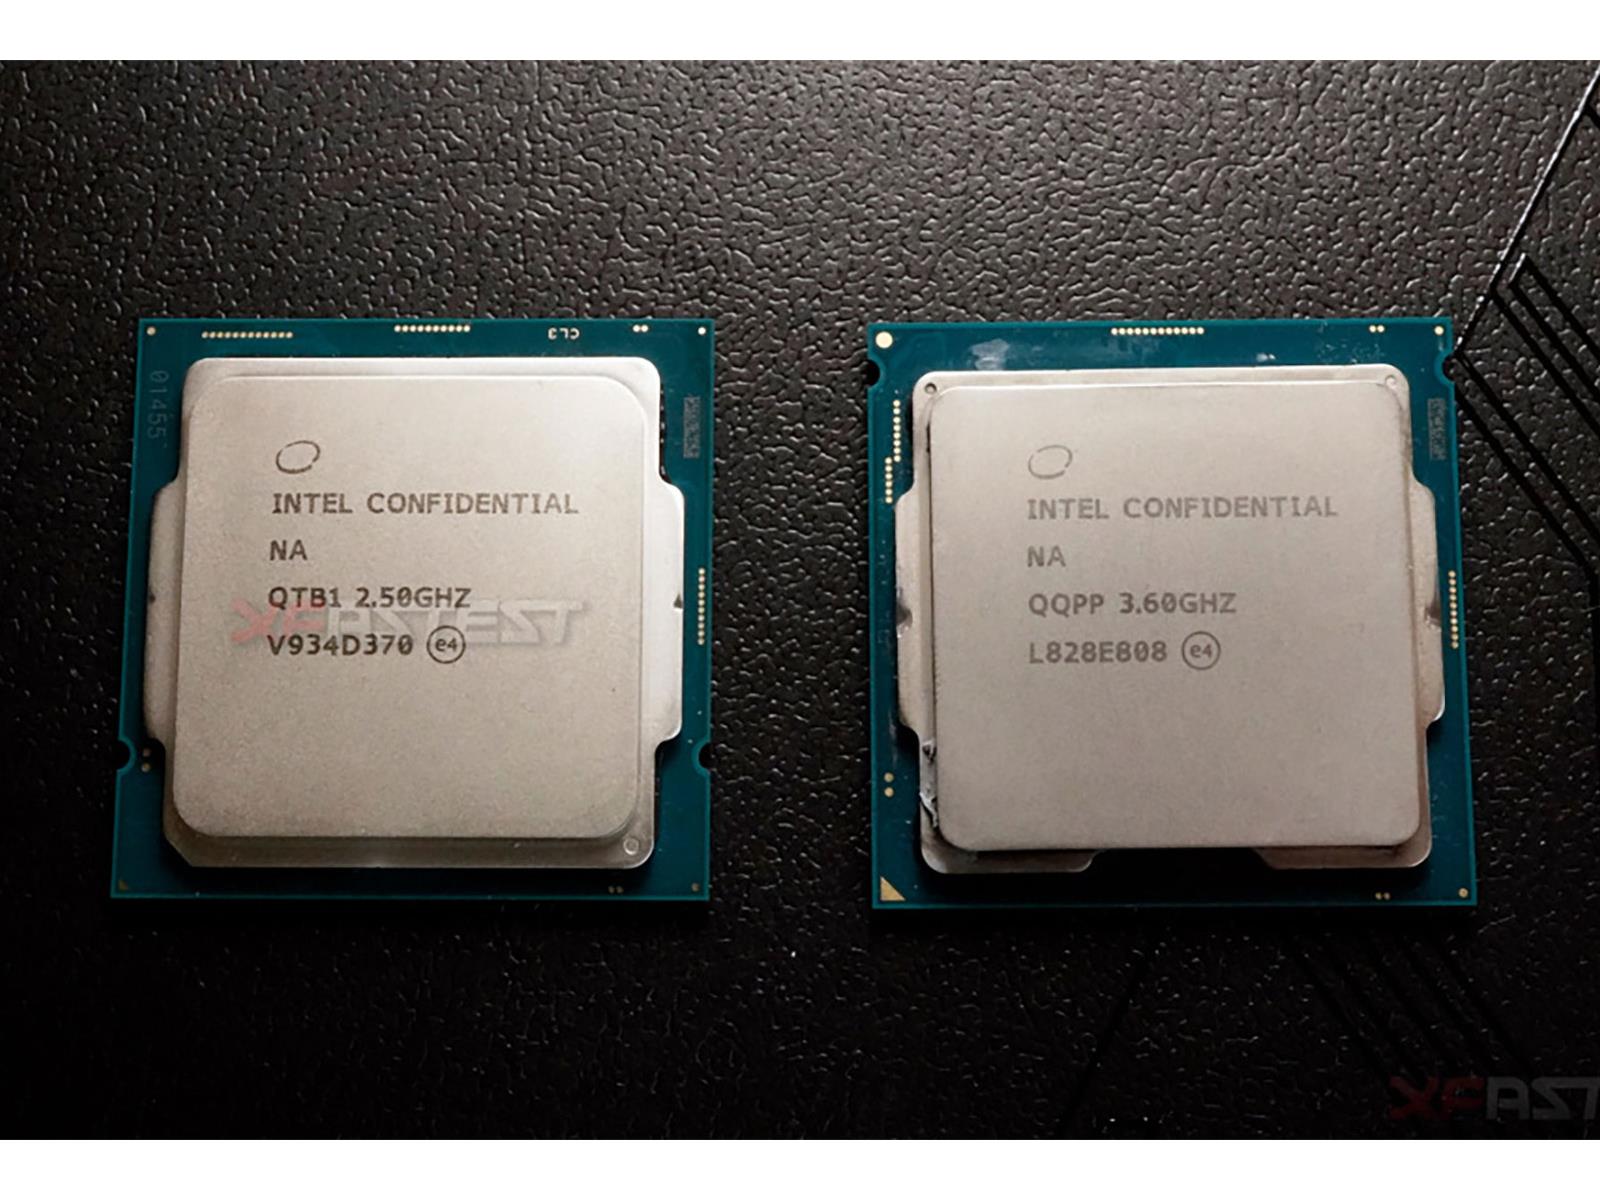 Intel Core i9-10900, Processor benchmarks